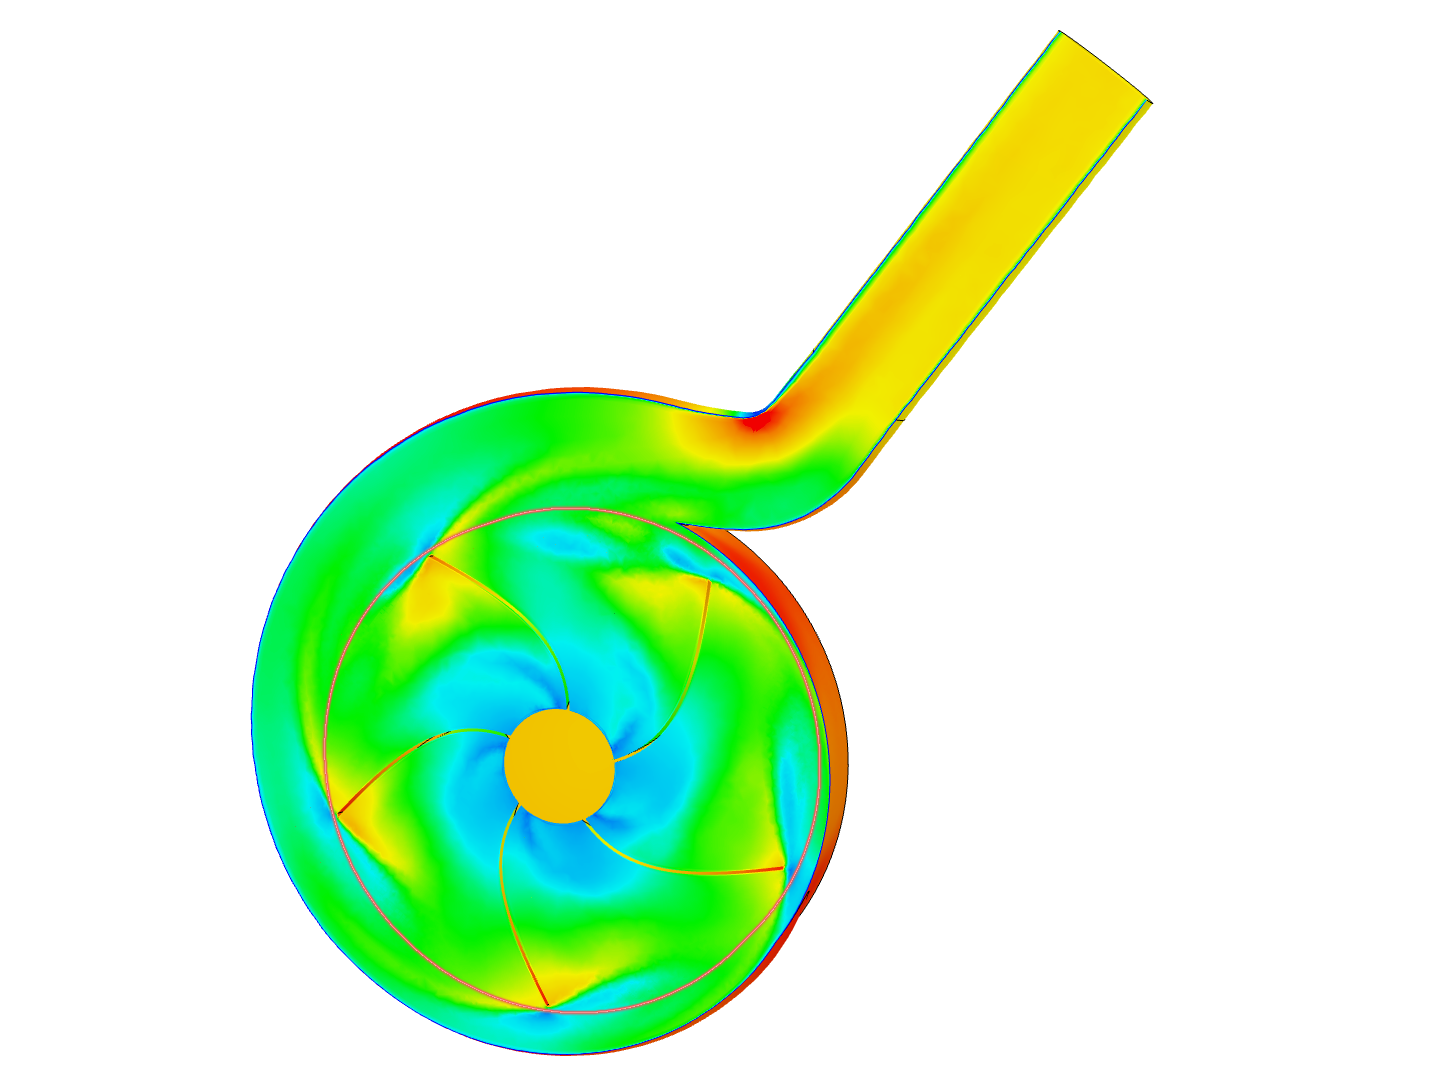 centerfugal pump - Copy image